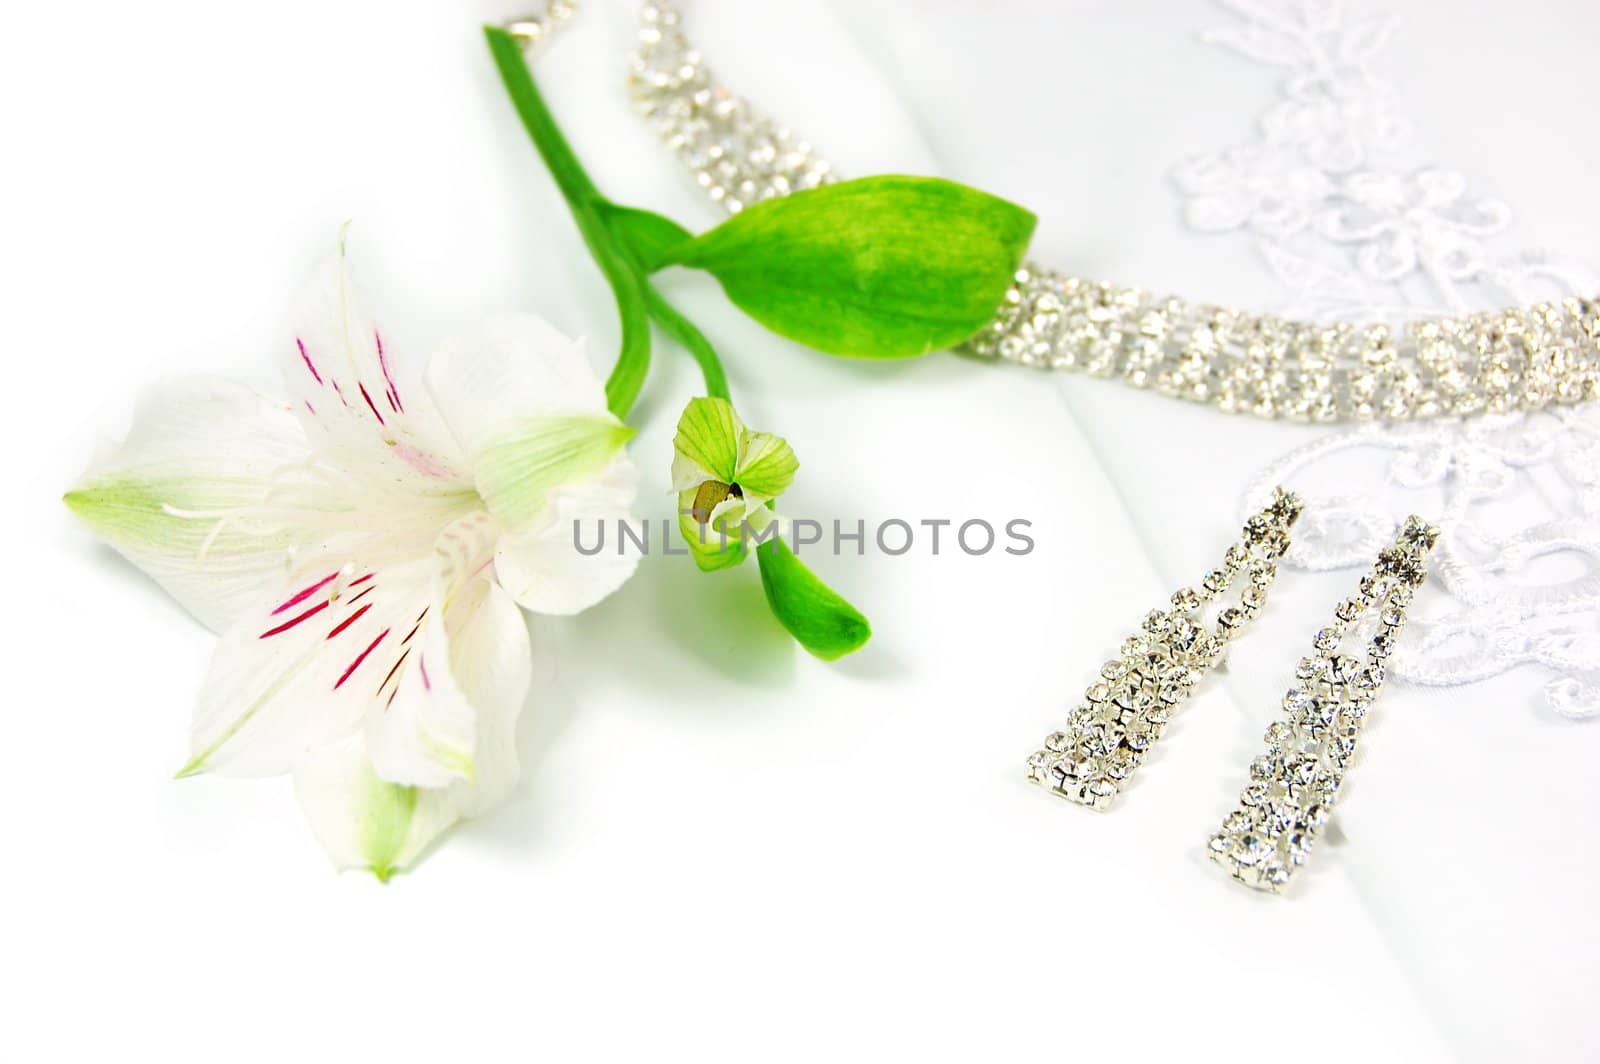 Wedding jewelery, laces, earrings and amaryllis flower